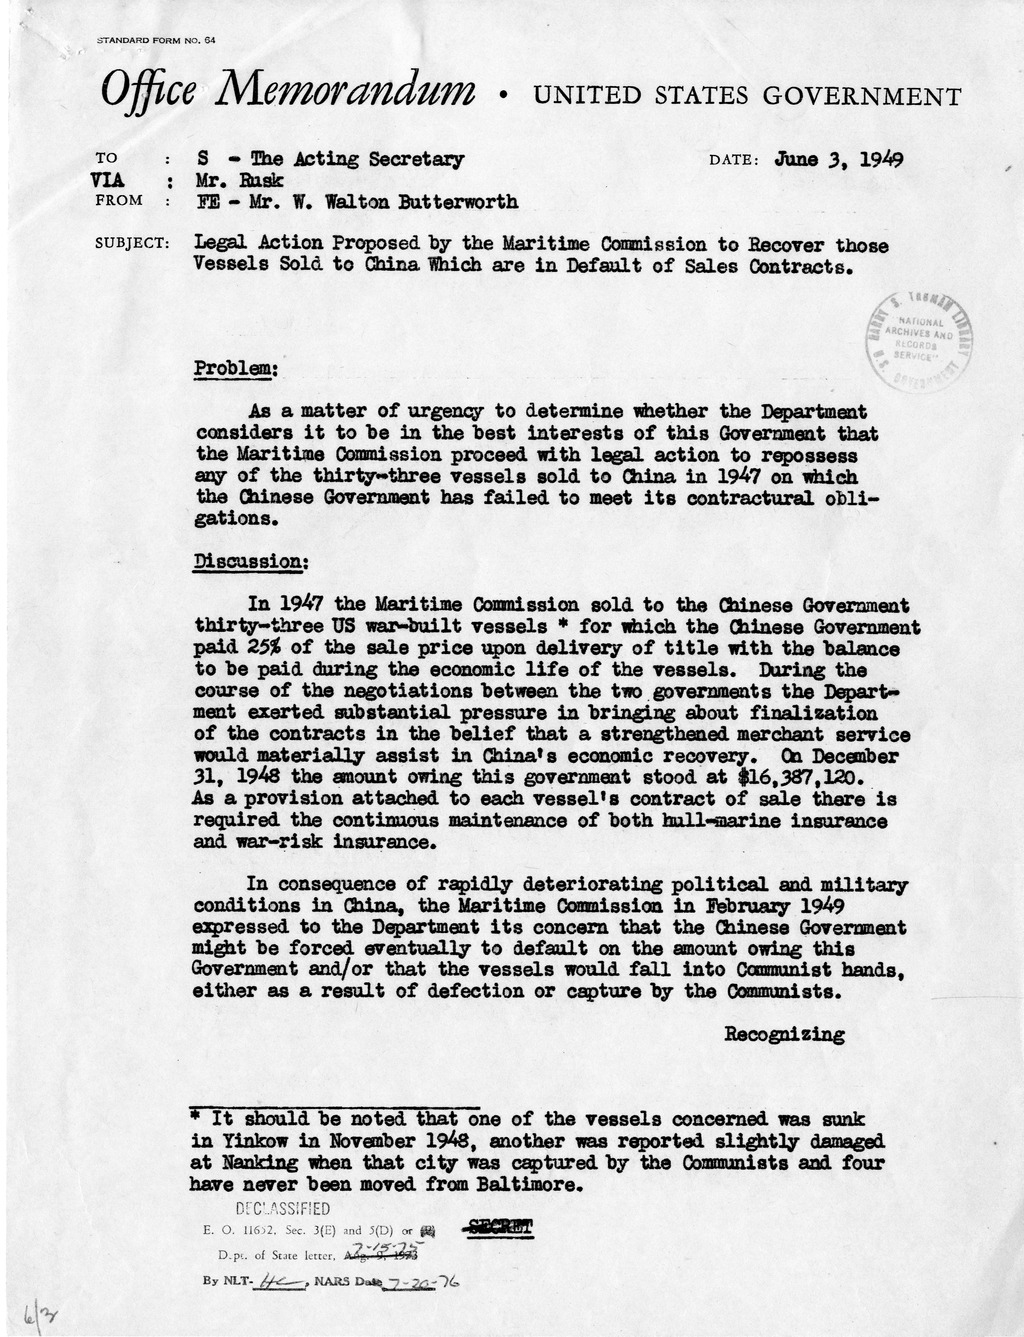 Memorandum from Walton Butterworth to The Acting Secretary of State